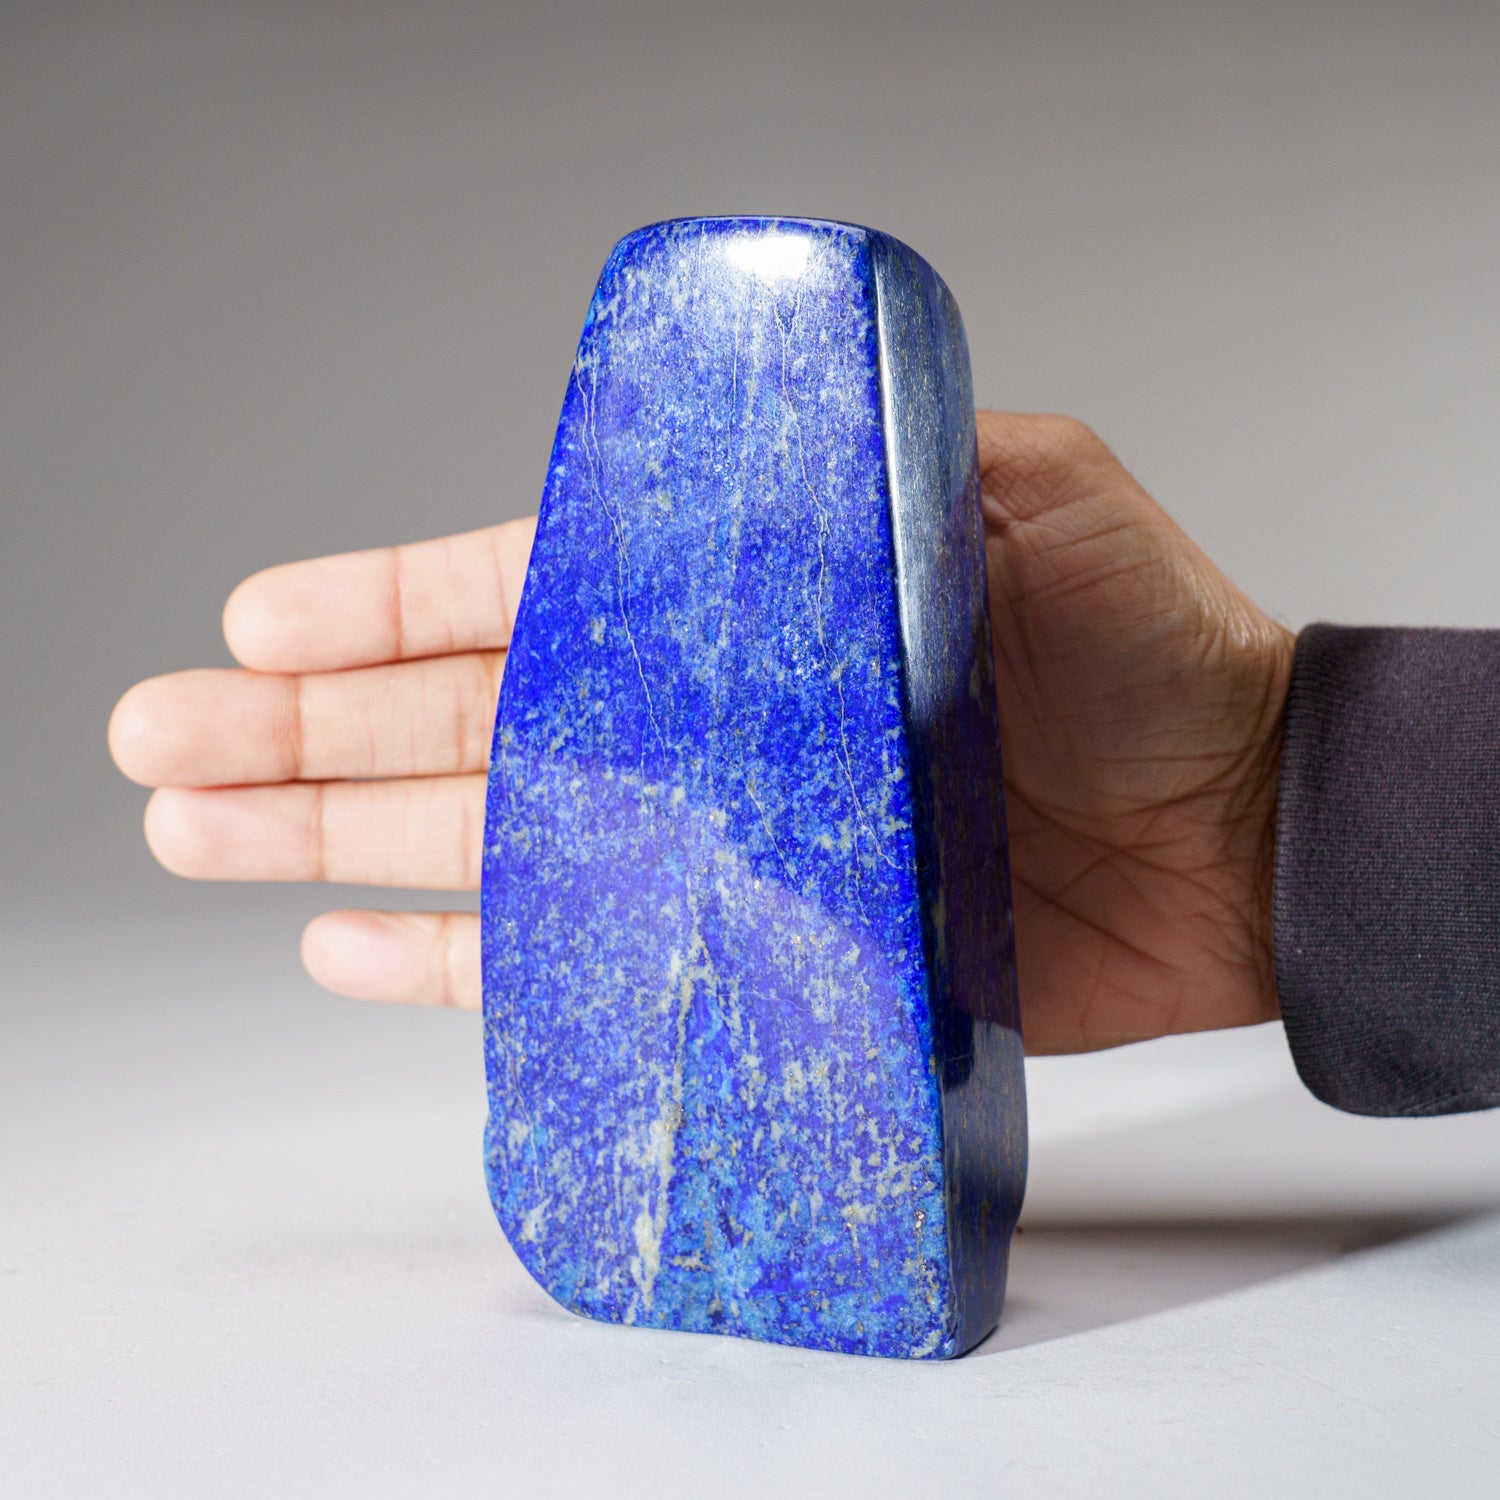 Polished Lapis Lazuli Freeform from Afghanistan (2.5 lbs)